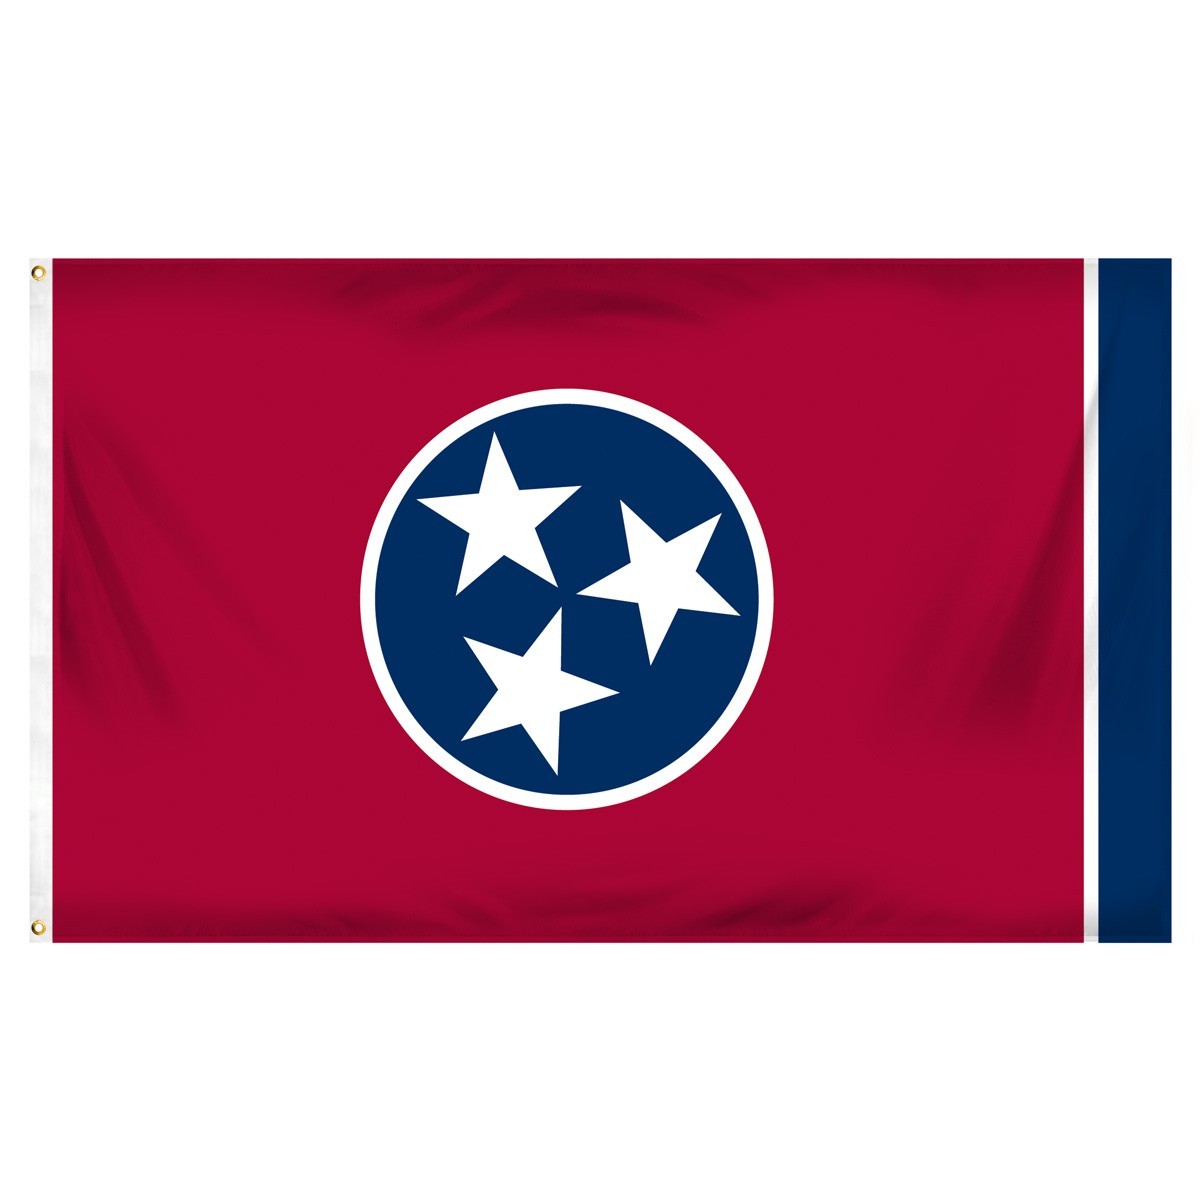 Bandera de poliéster interior de Tennessee de 2 pies x 3 pies